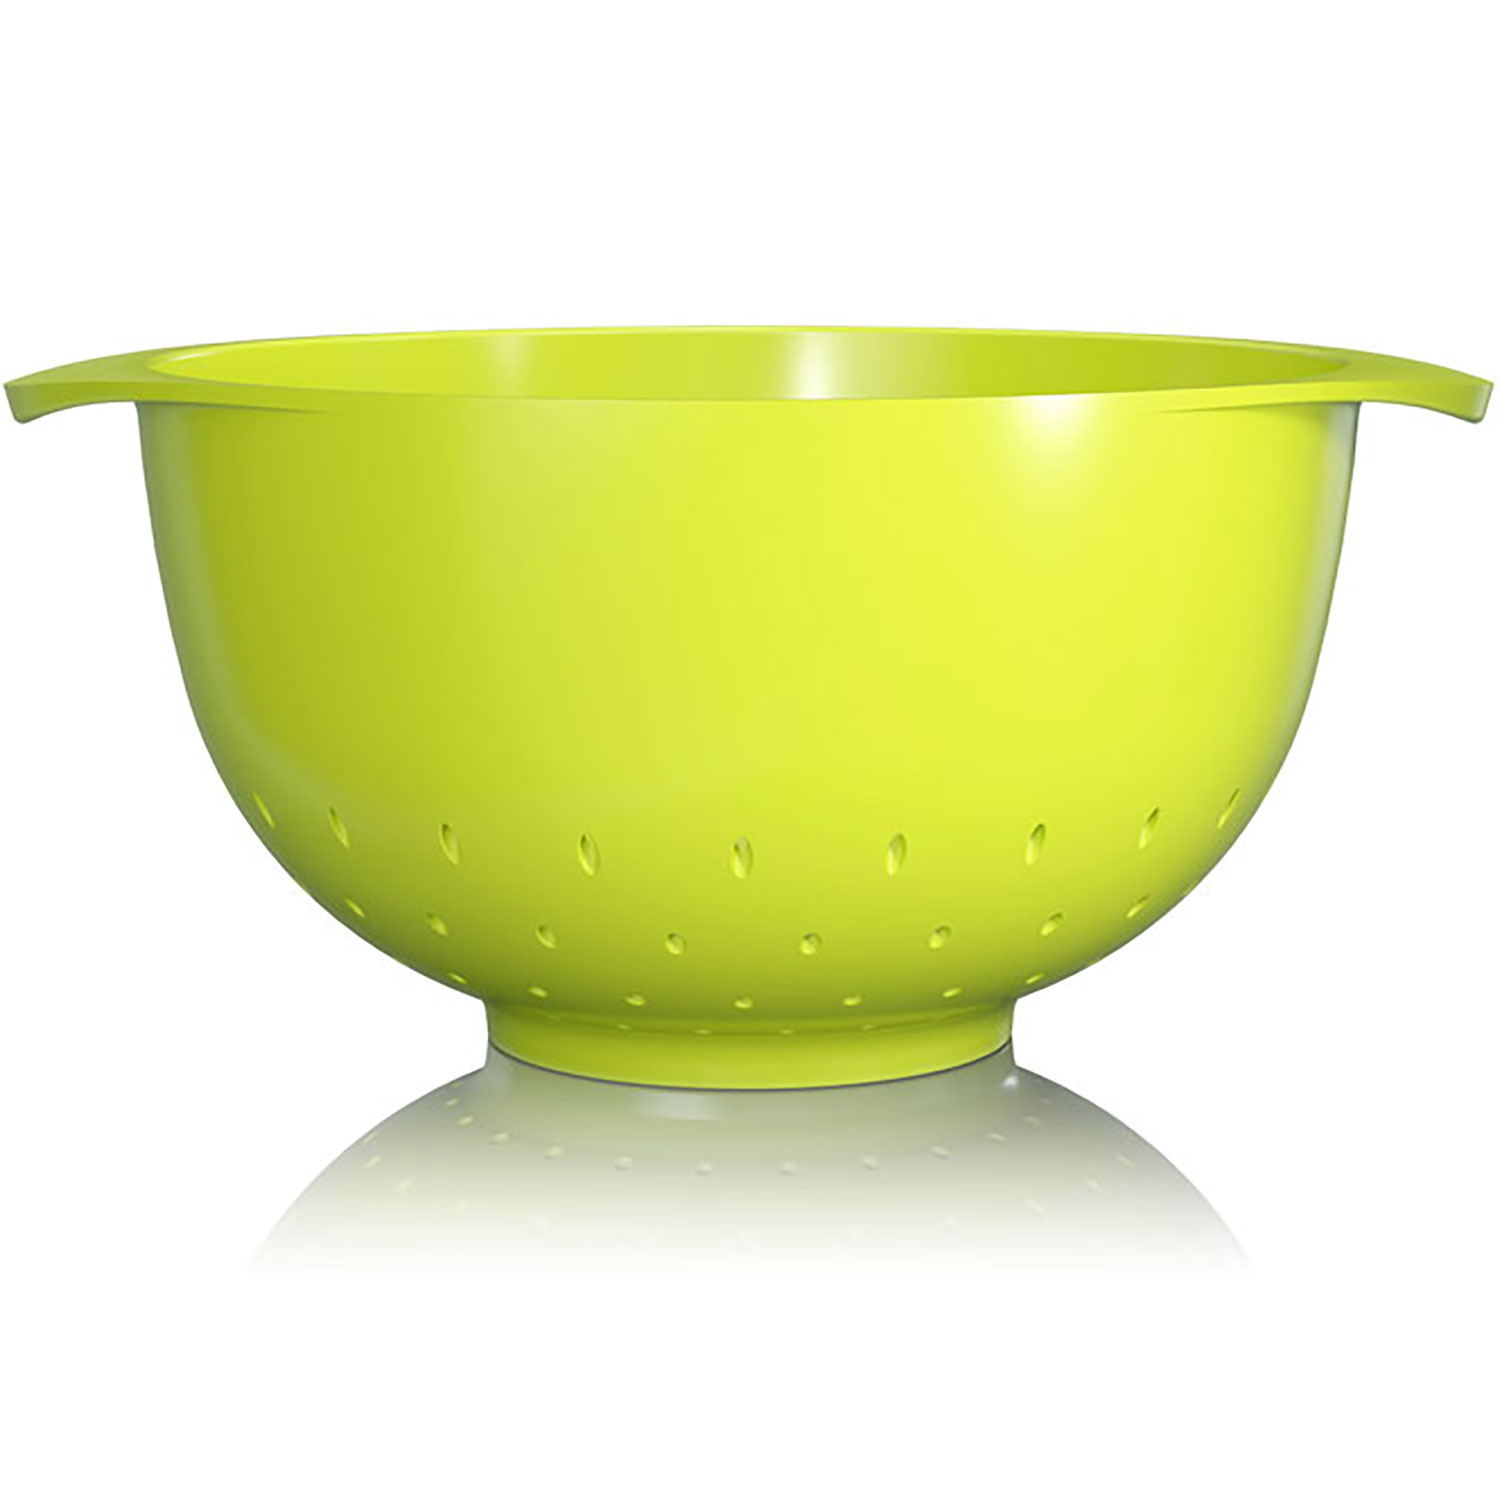 Large Plastic Mixing Bowl 3L / 5L Round Salad Serving Baking Bowl